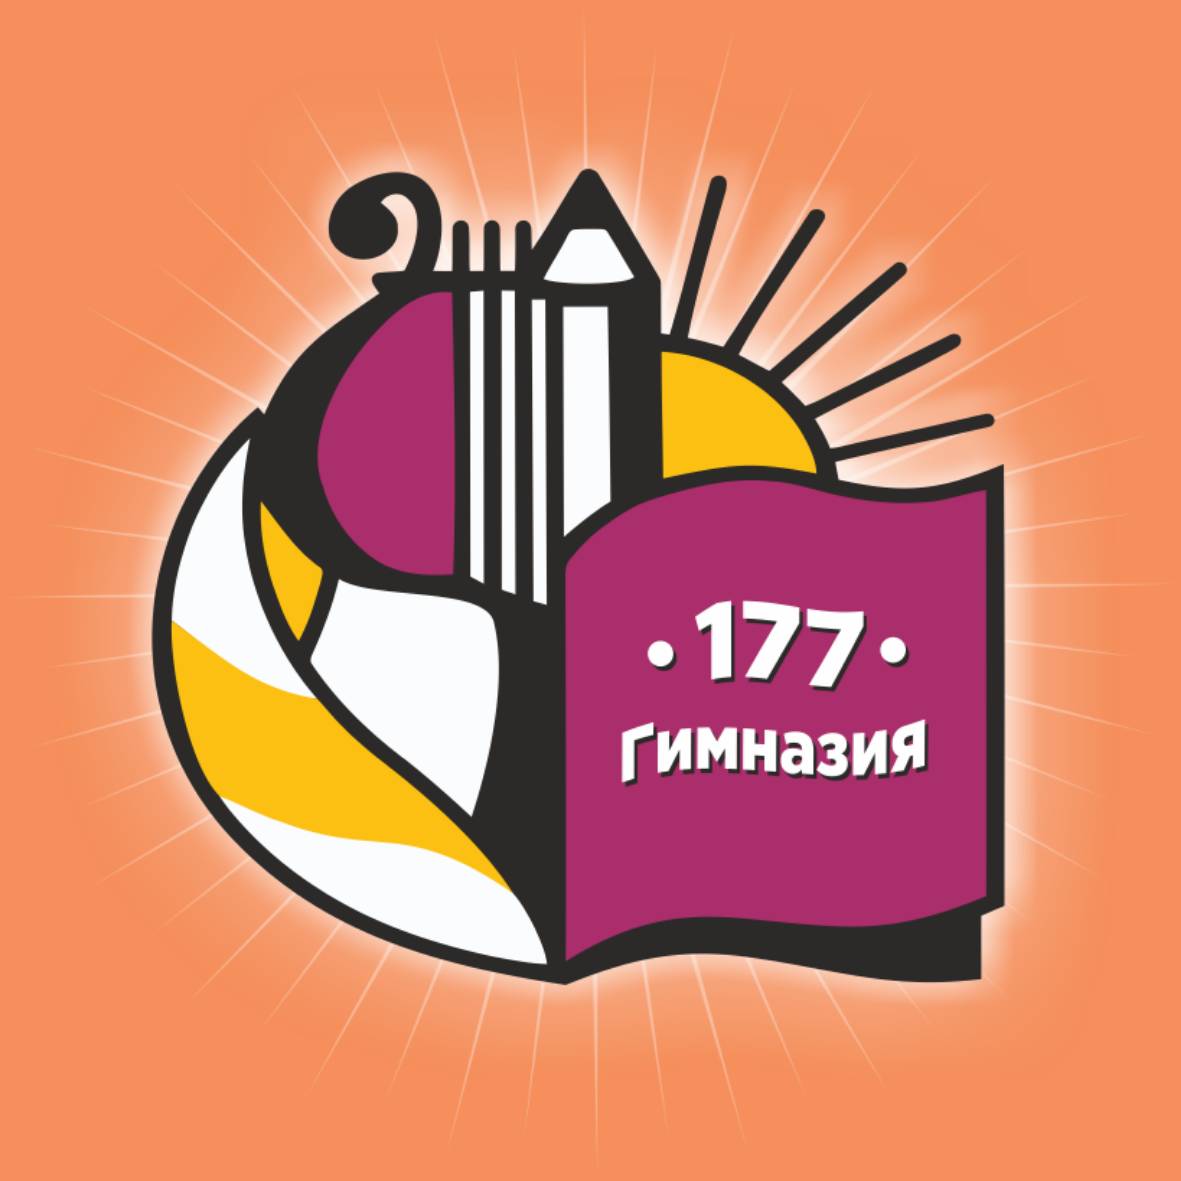 177 гимназия красногвардейского